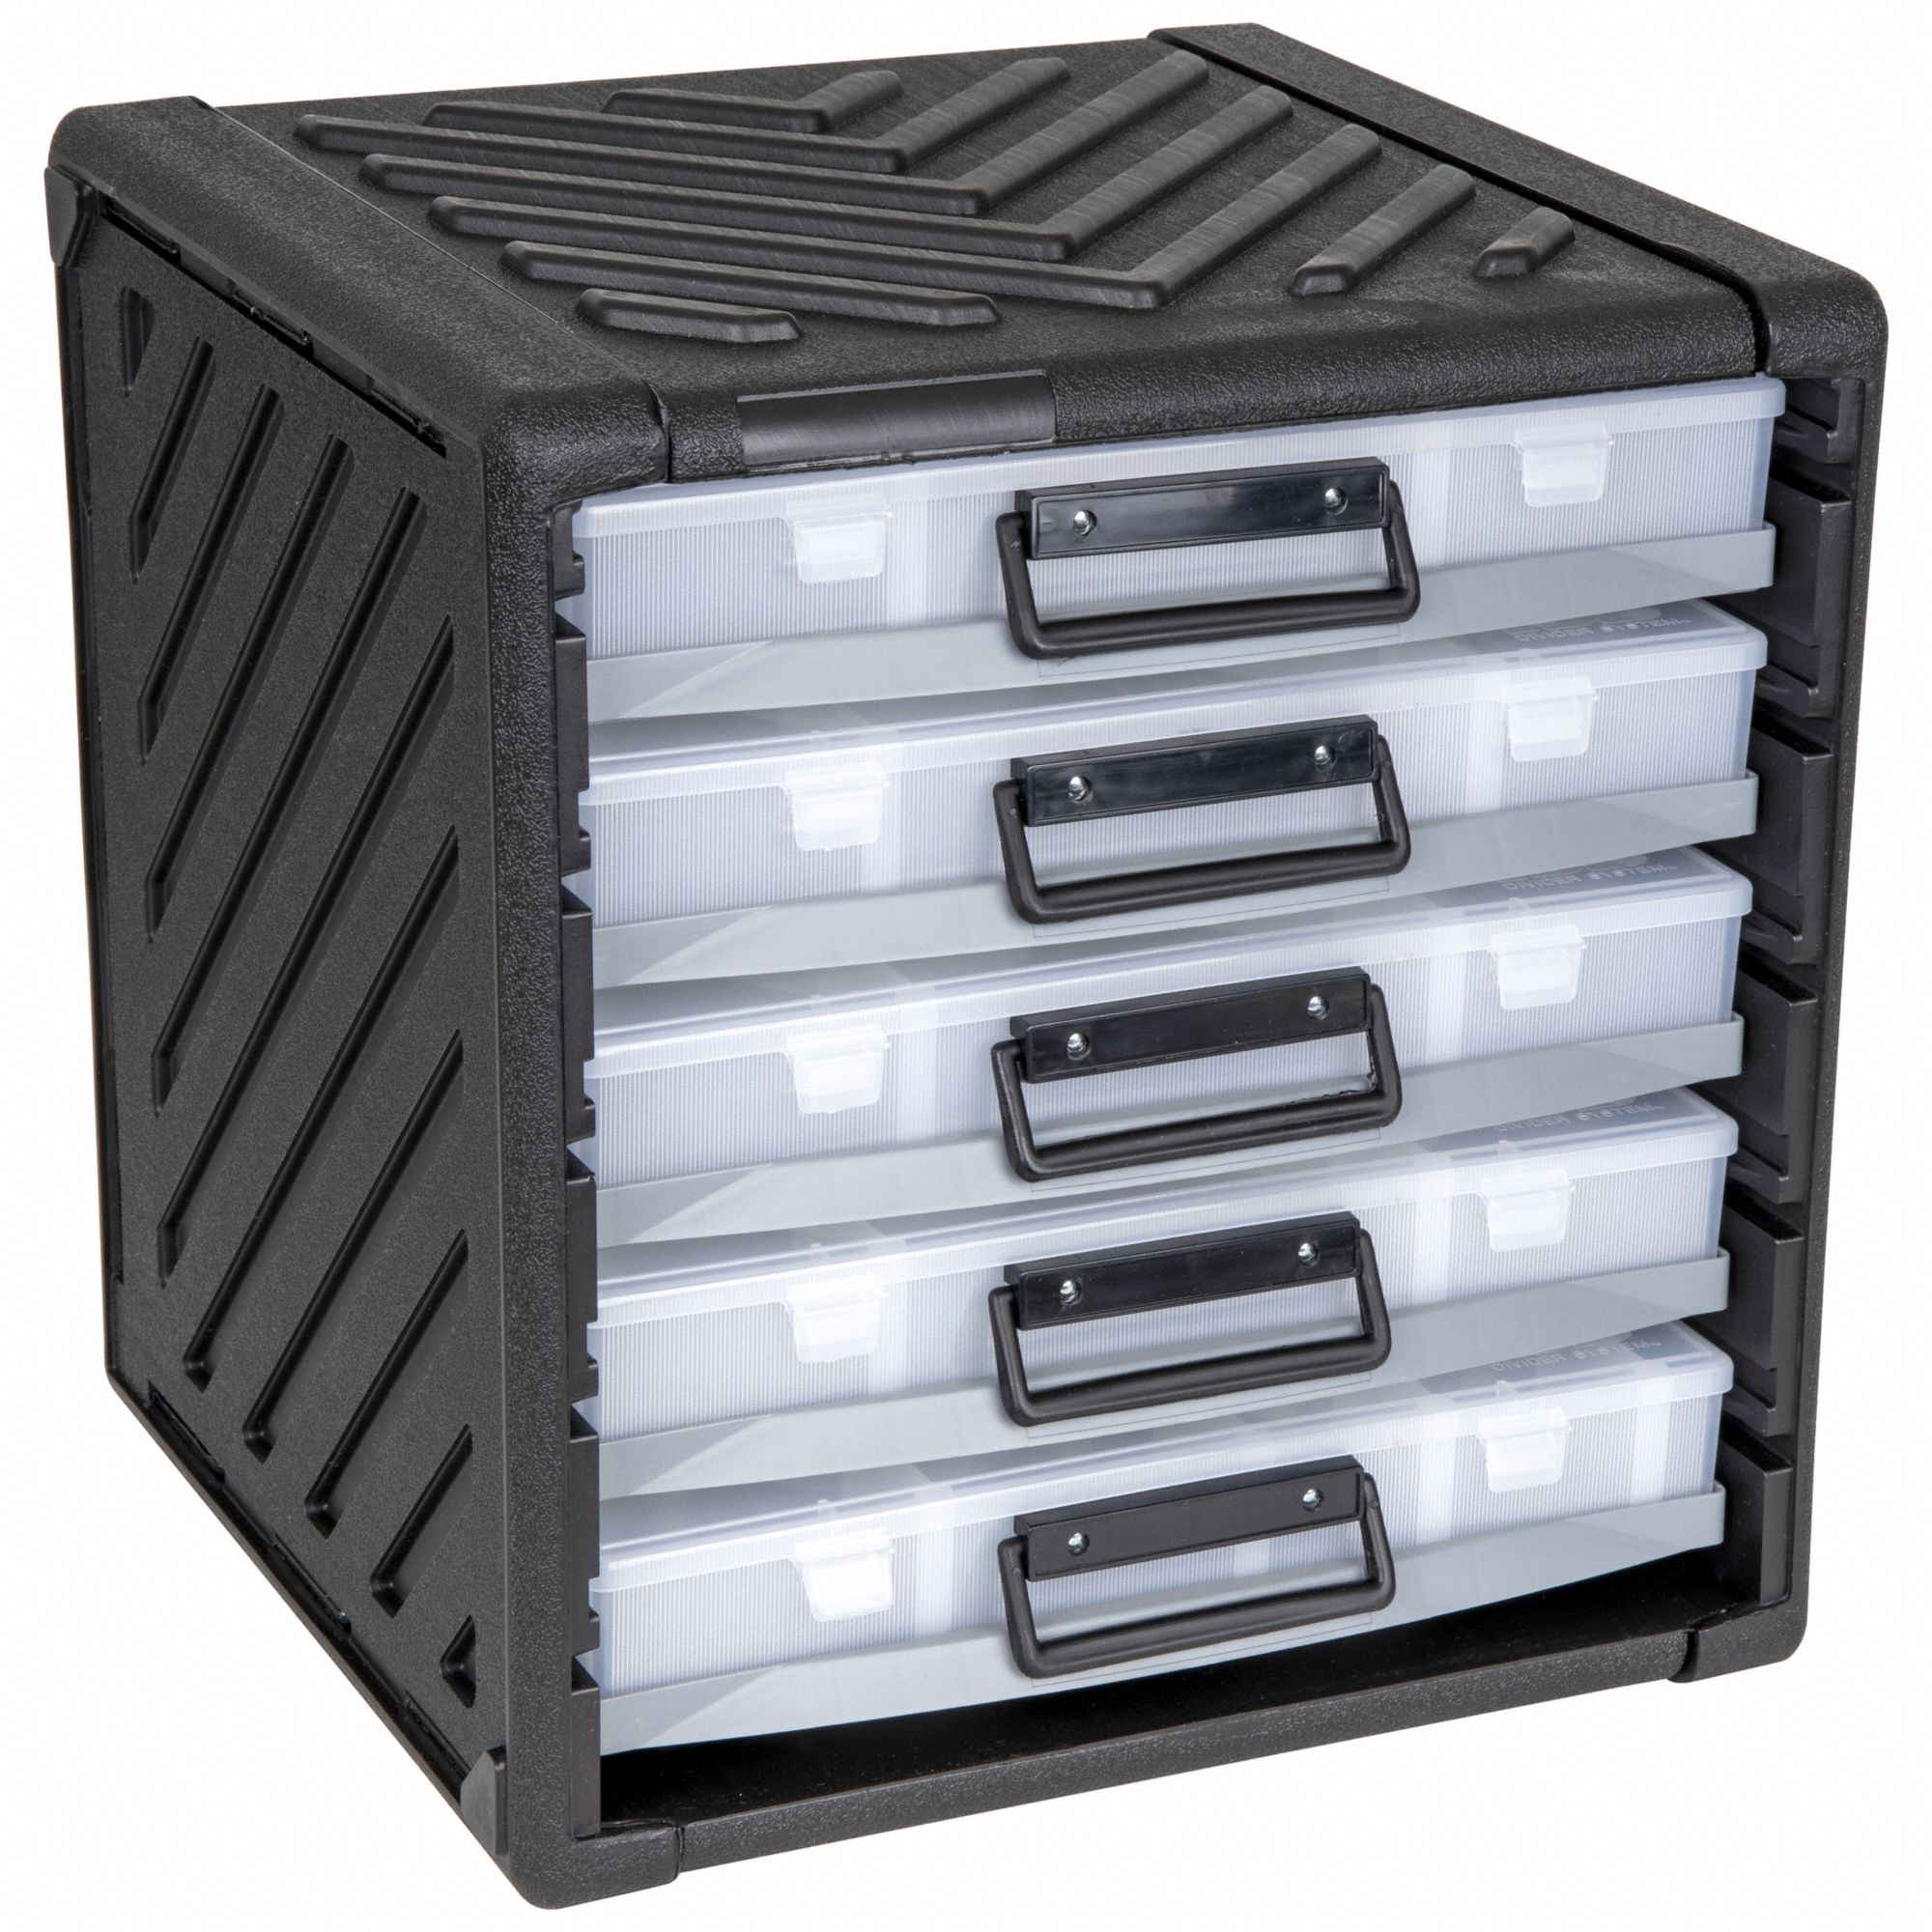 DURATOOL Hardware Organizer Storage Box with 19 Removable